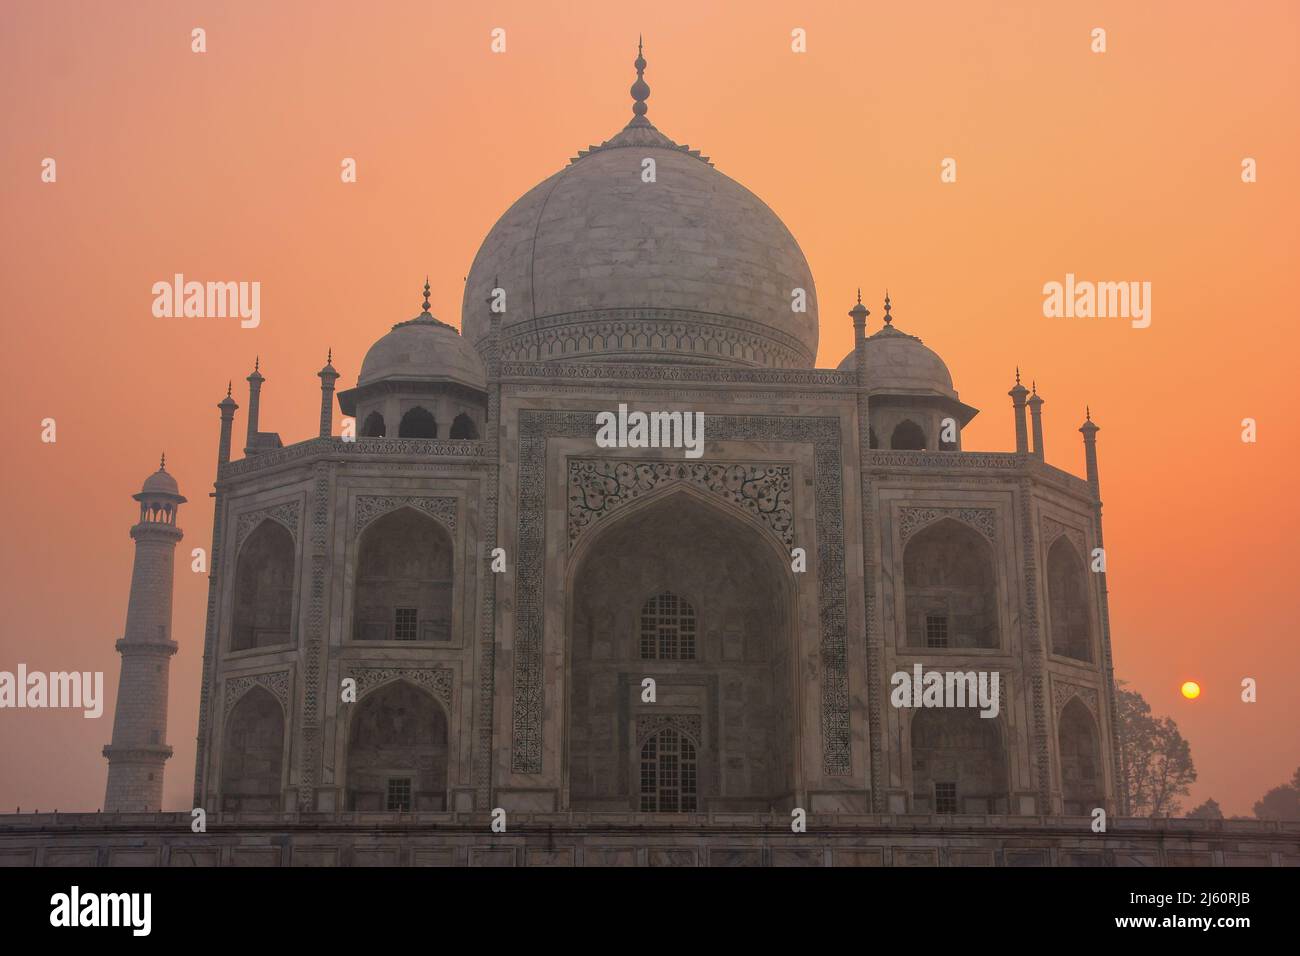 Taj Mahal at sunrise, Agra, Uttar Pradesh, India. Taj Mahal was designated as a UNESCO World Heritage Site in 1983. Stock Photo